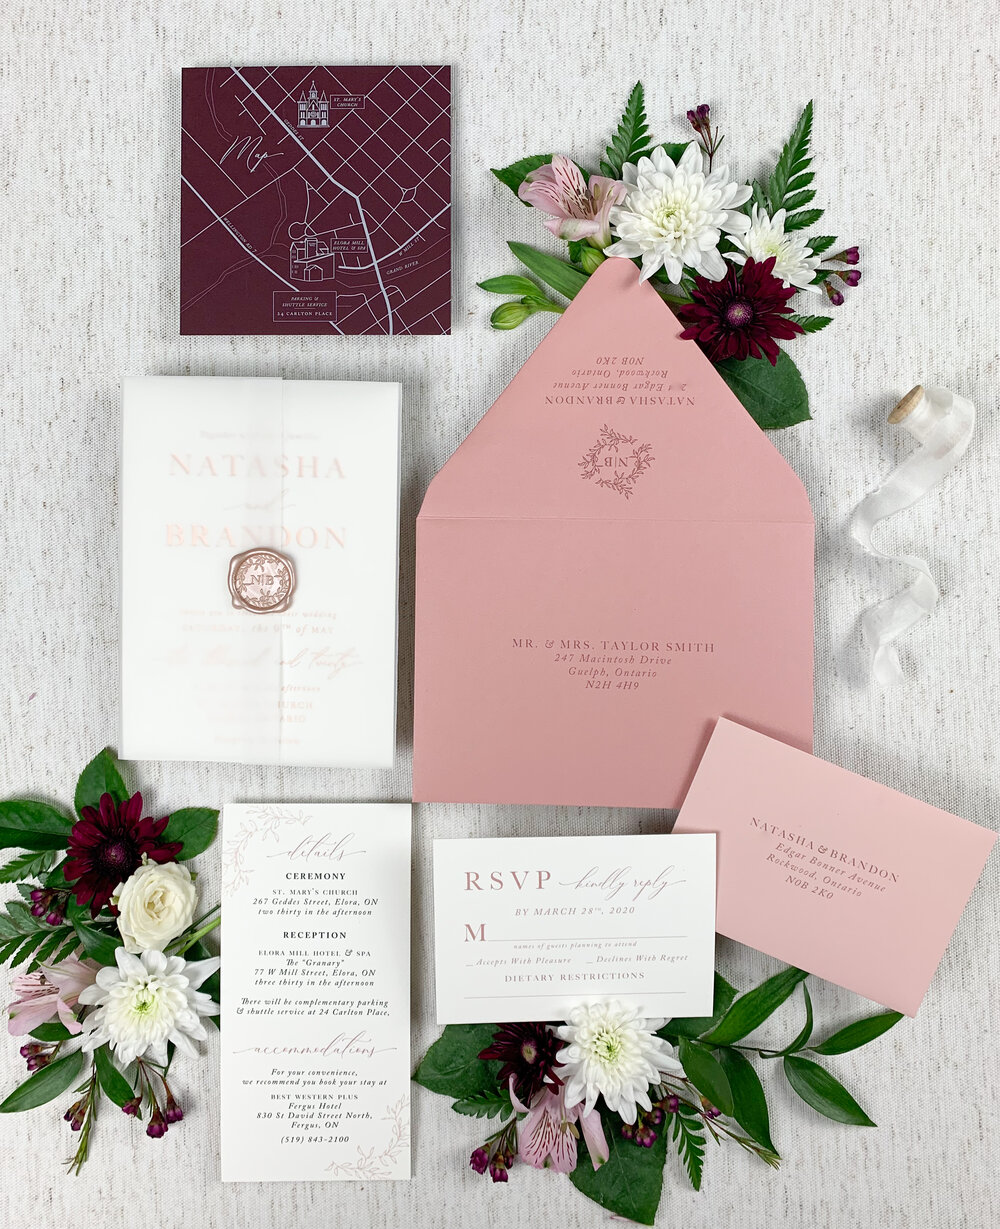 monarch-design-co=custom-invitations-Tayne-and-ashley-17.jpg